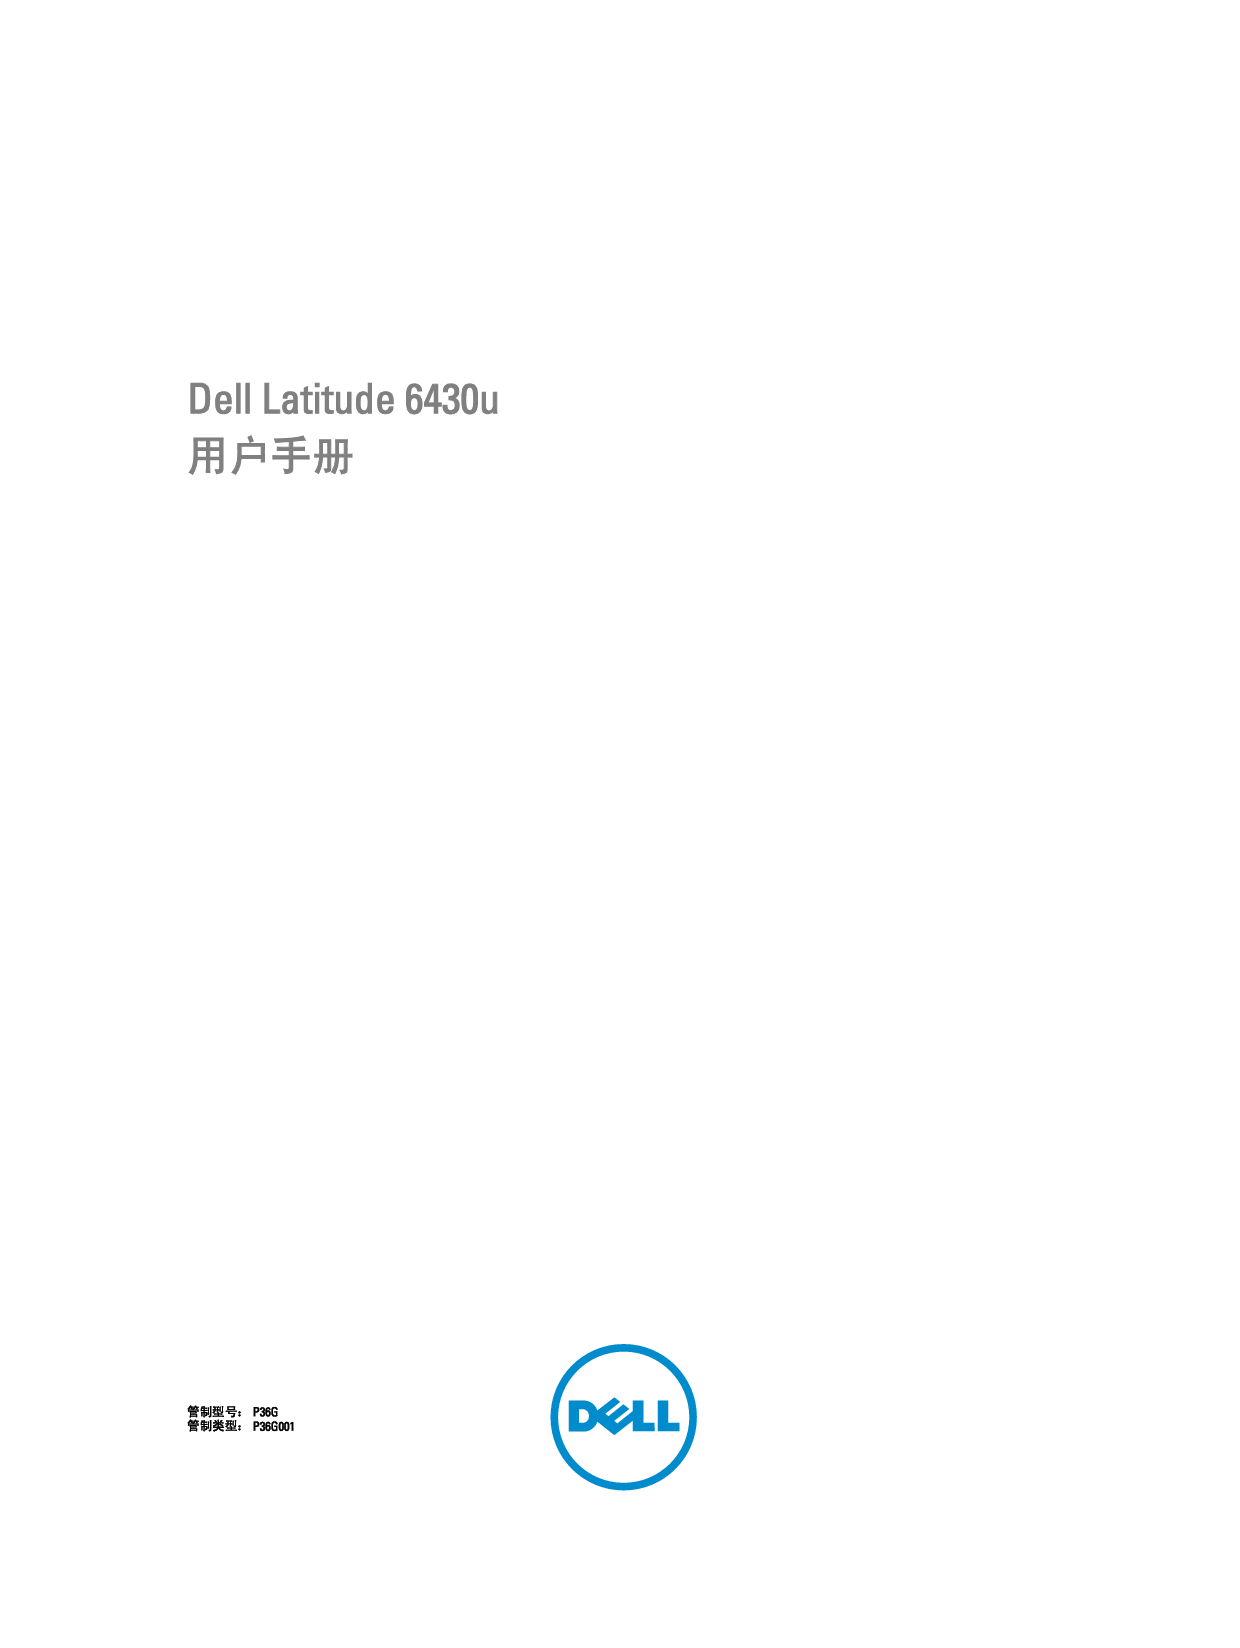 戴尔 Dell Latitude 6430U 用户手册 封面